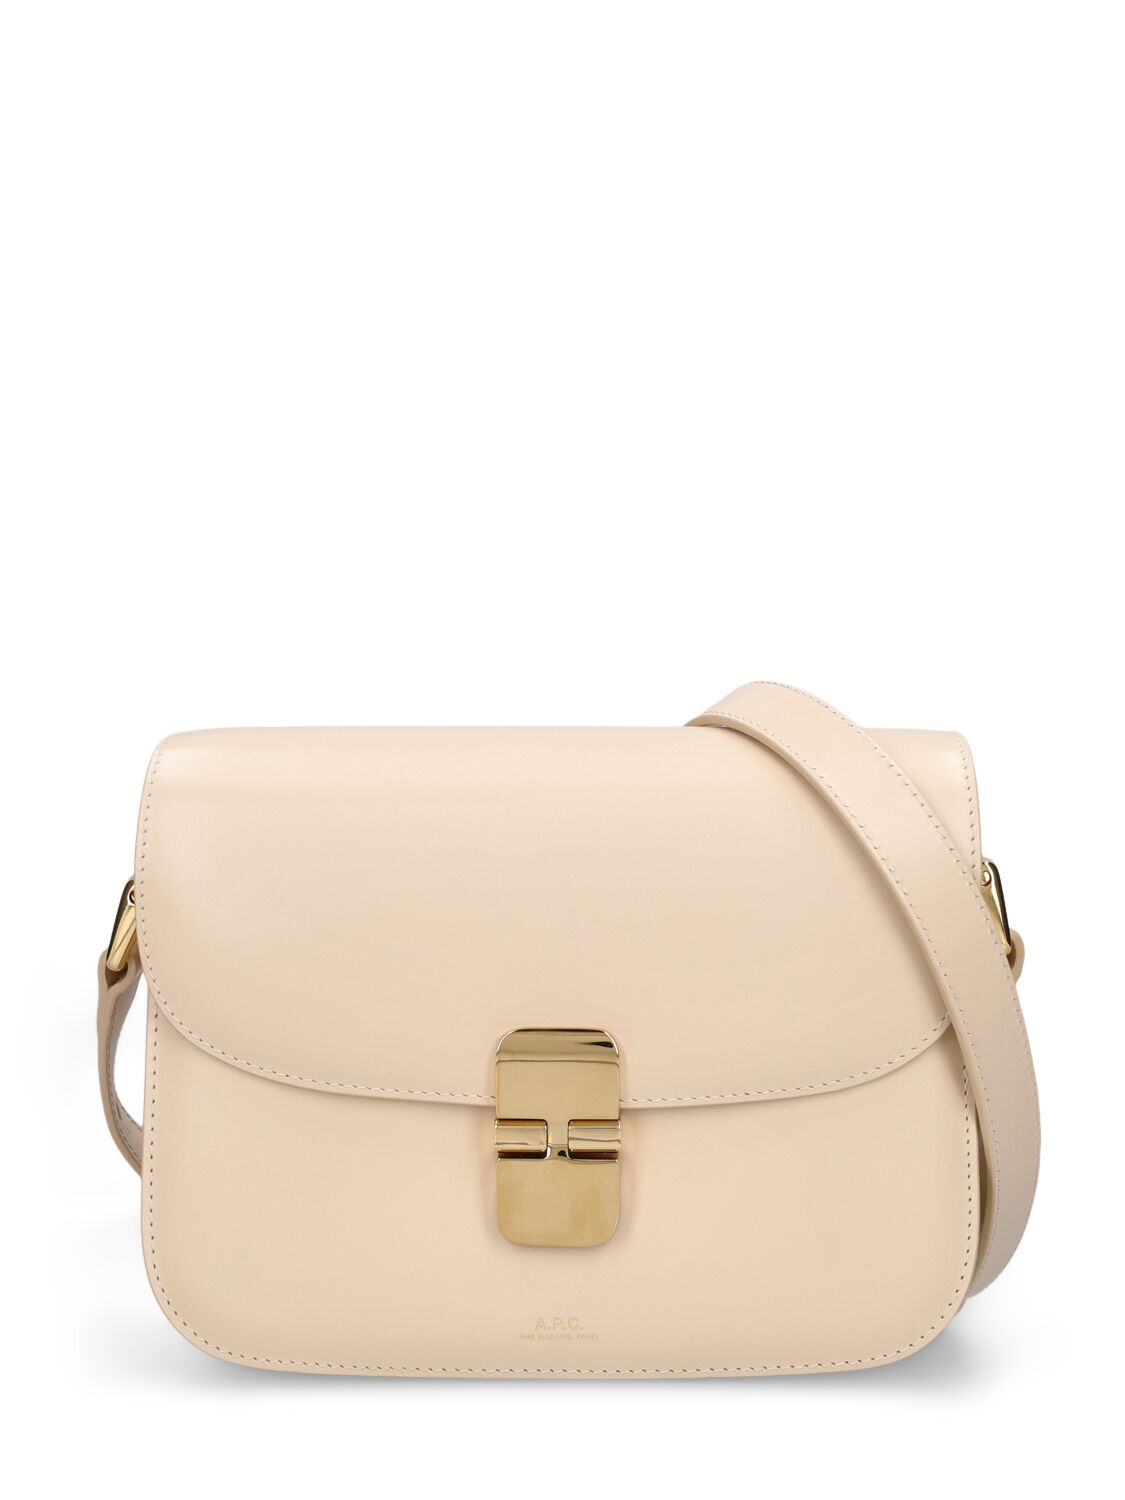 Apc Small Grace Leather Shoulder Bag In Cream